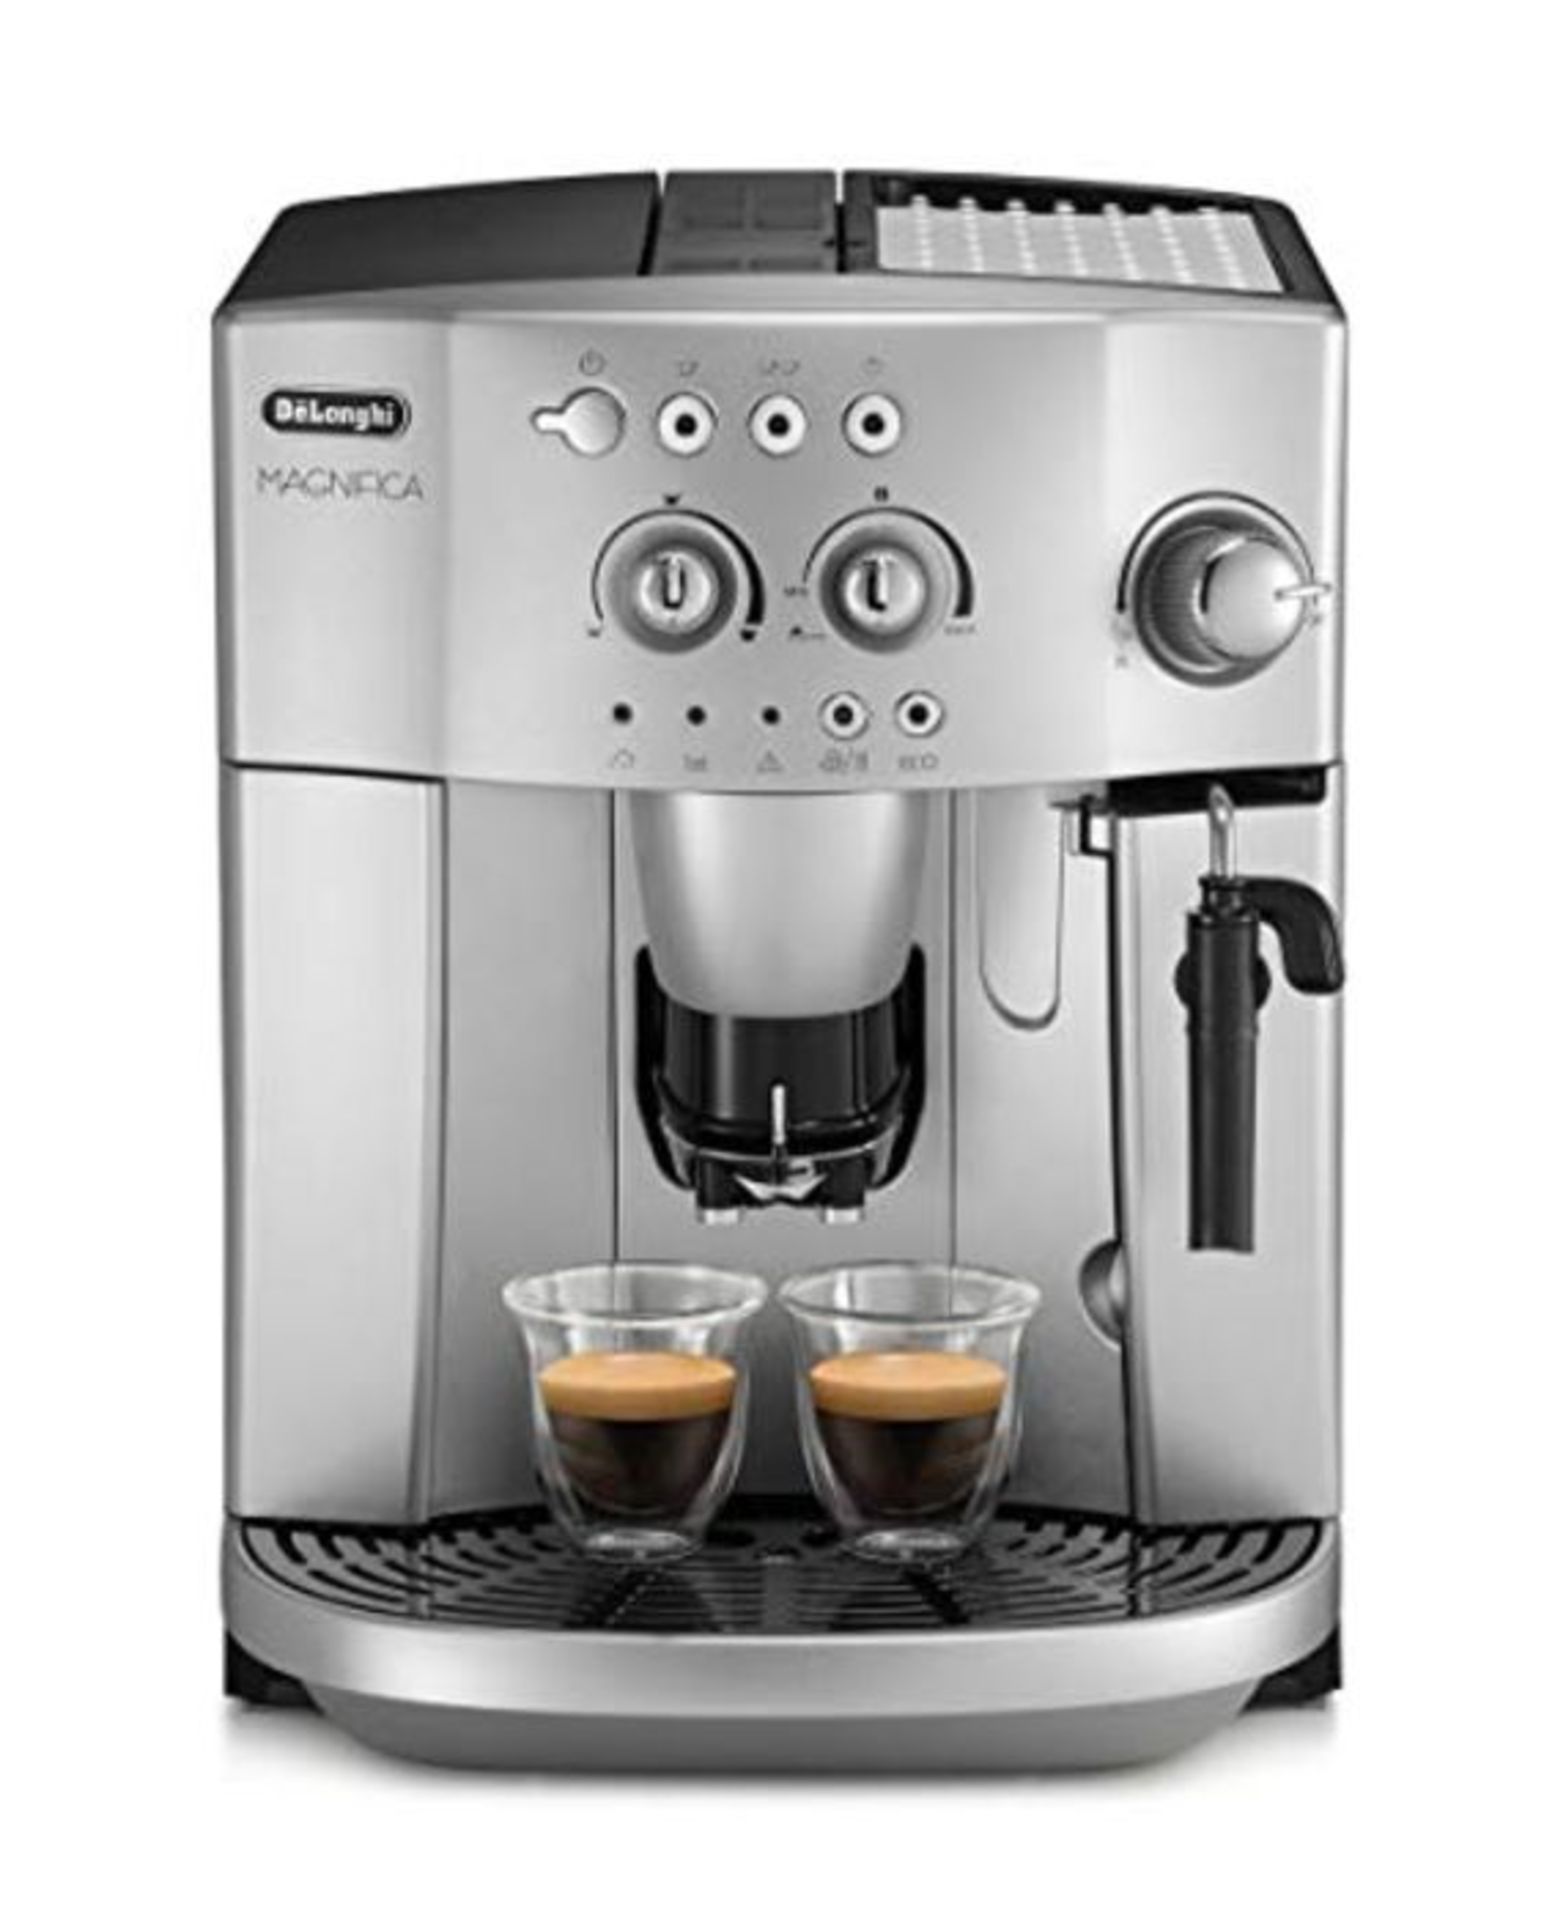 RRP £285.00 De'Longhi Magnifica, Automatic Bean to Cup Coffee Machine, Espresso, Cappuccino, ESAM